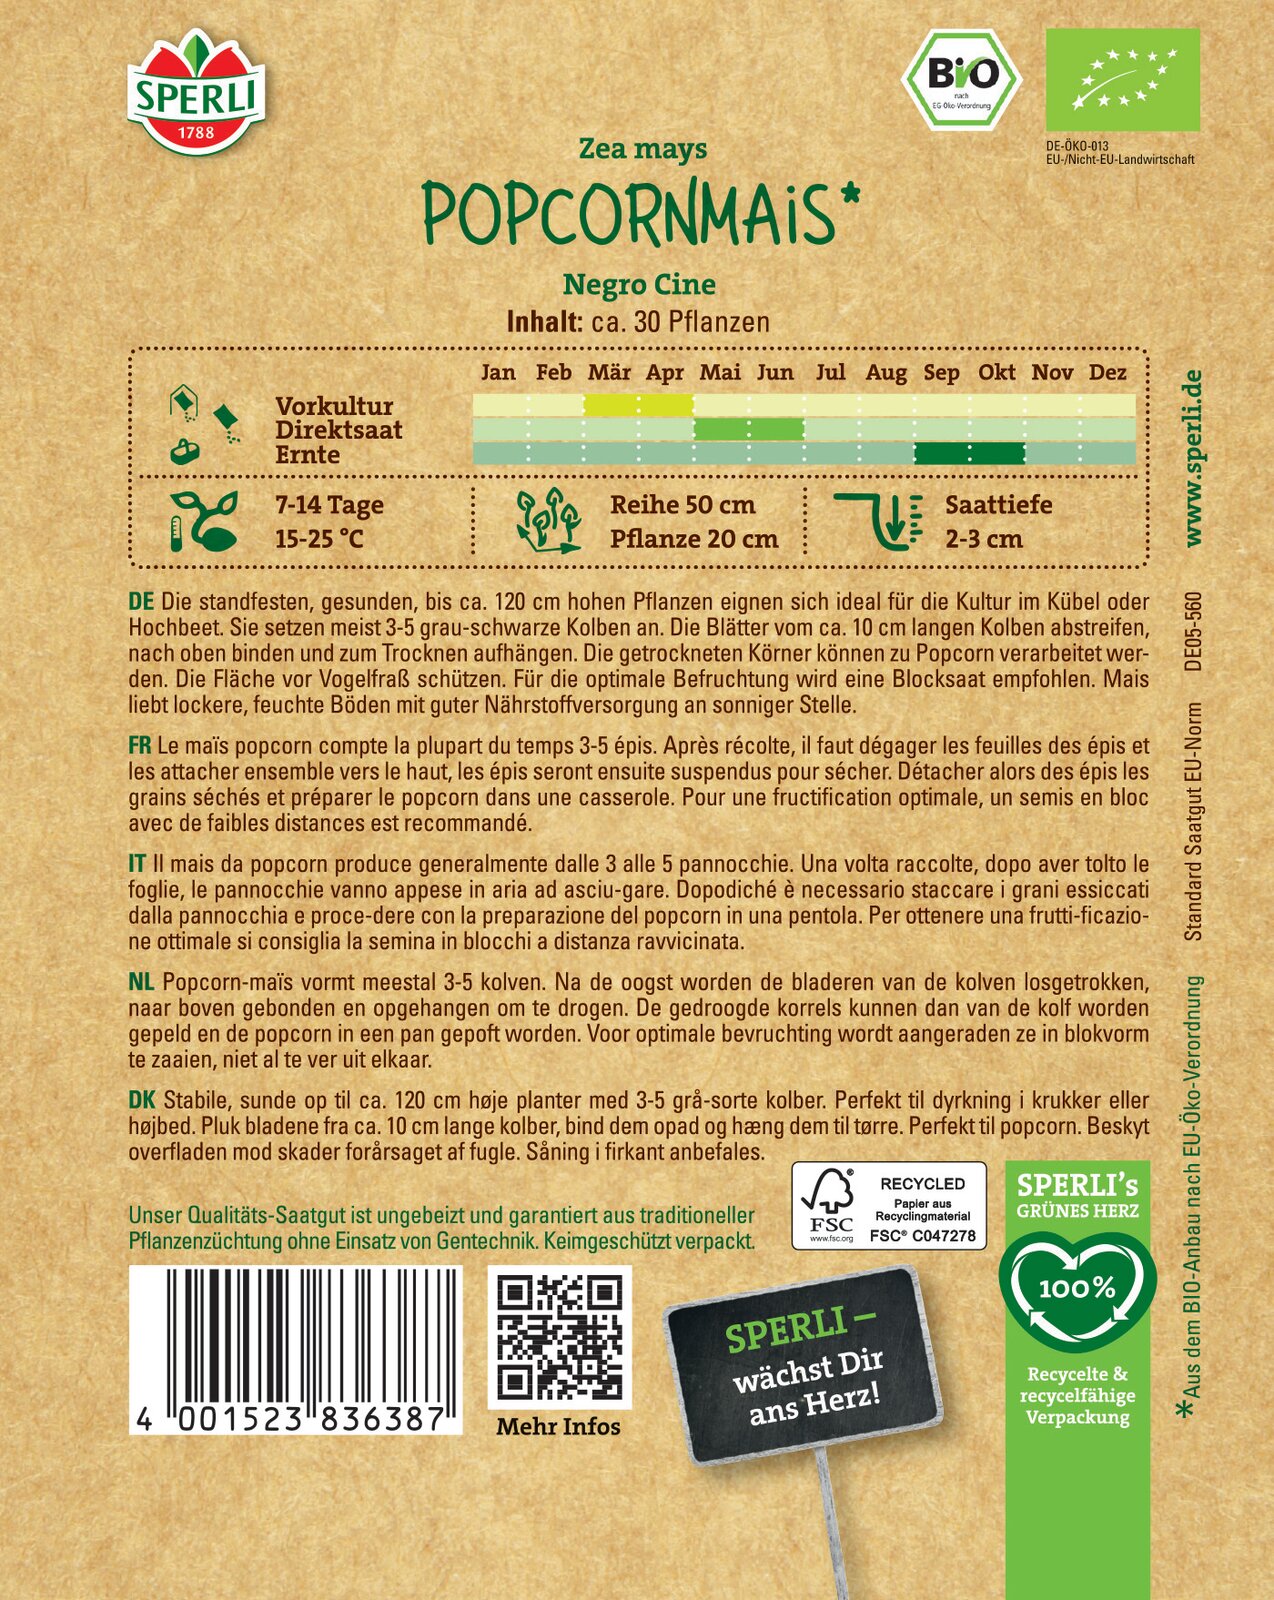 Organic popcorn Negro Cine Sperli approx. 30 kernels